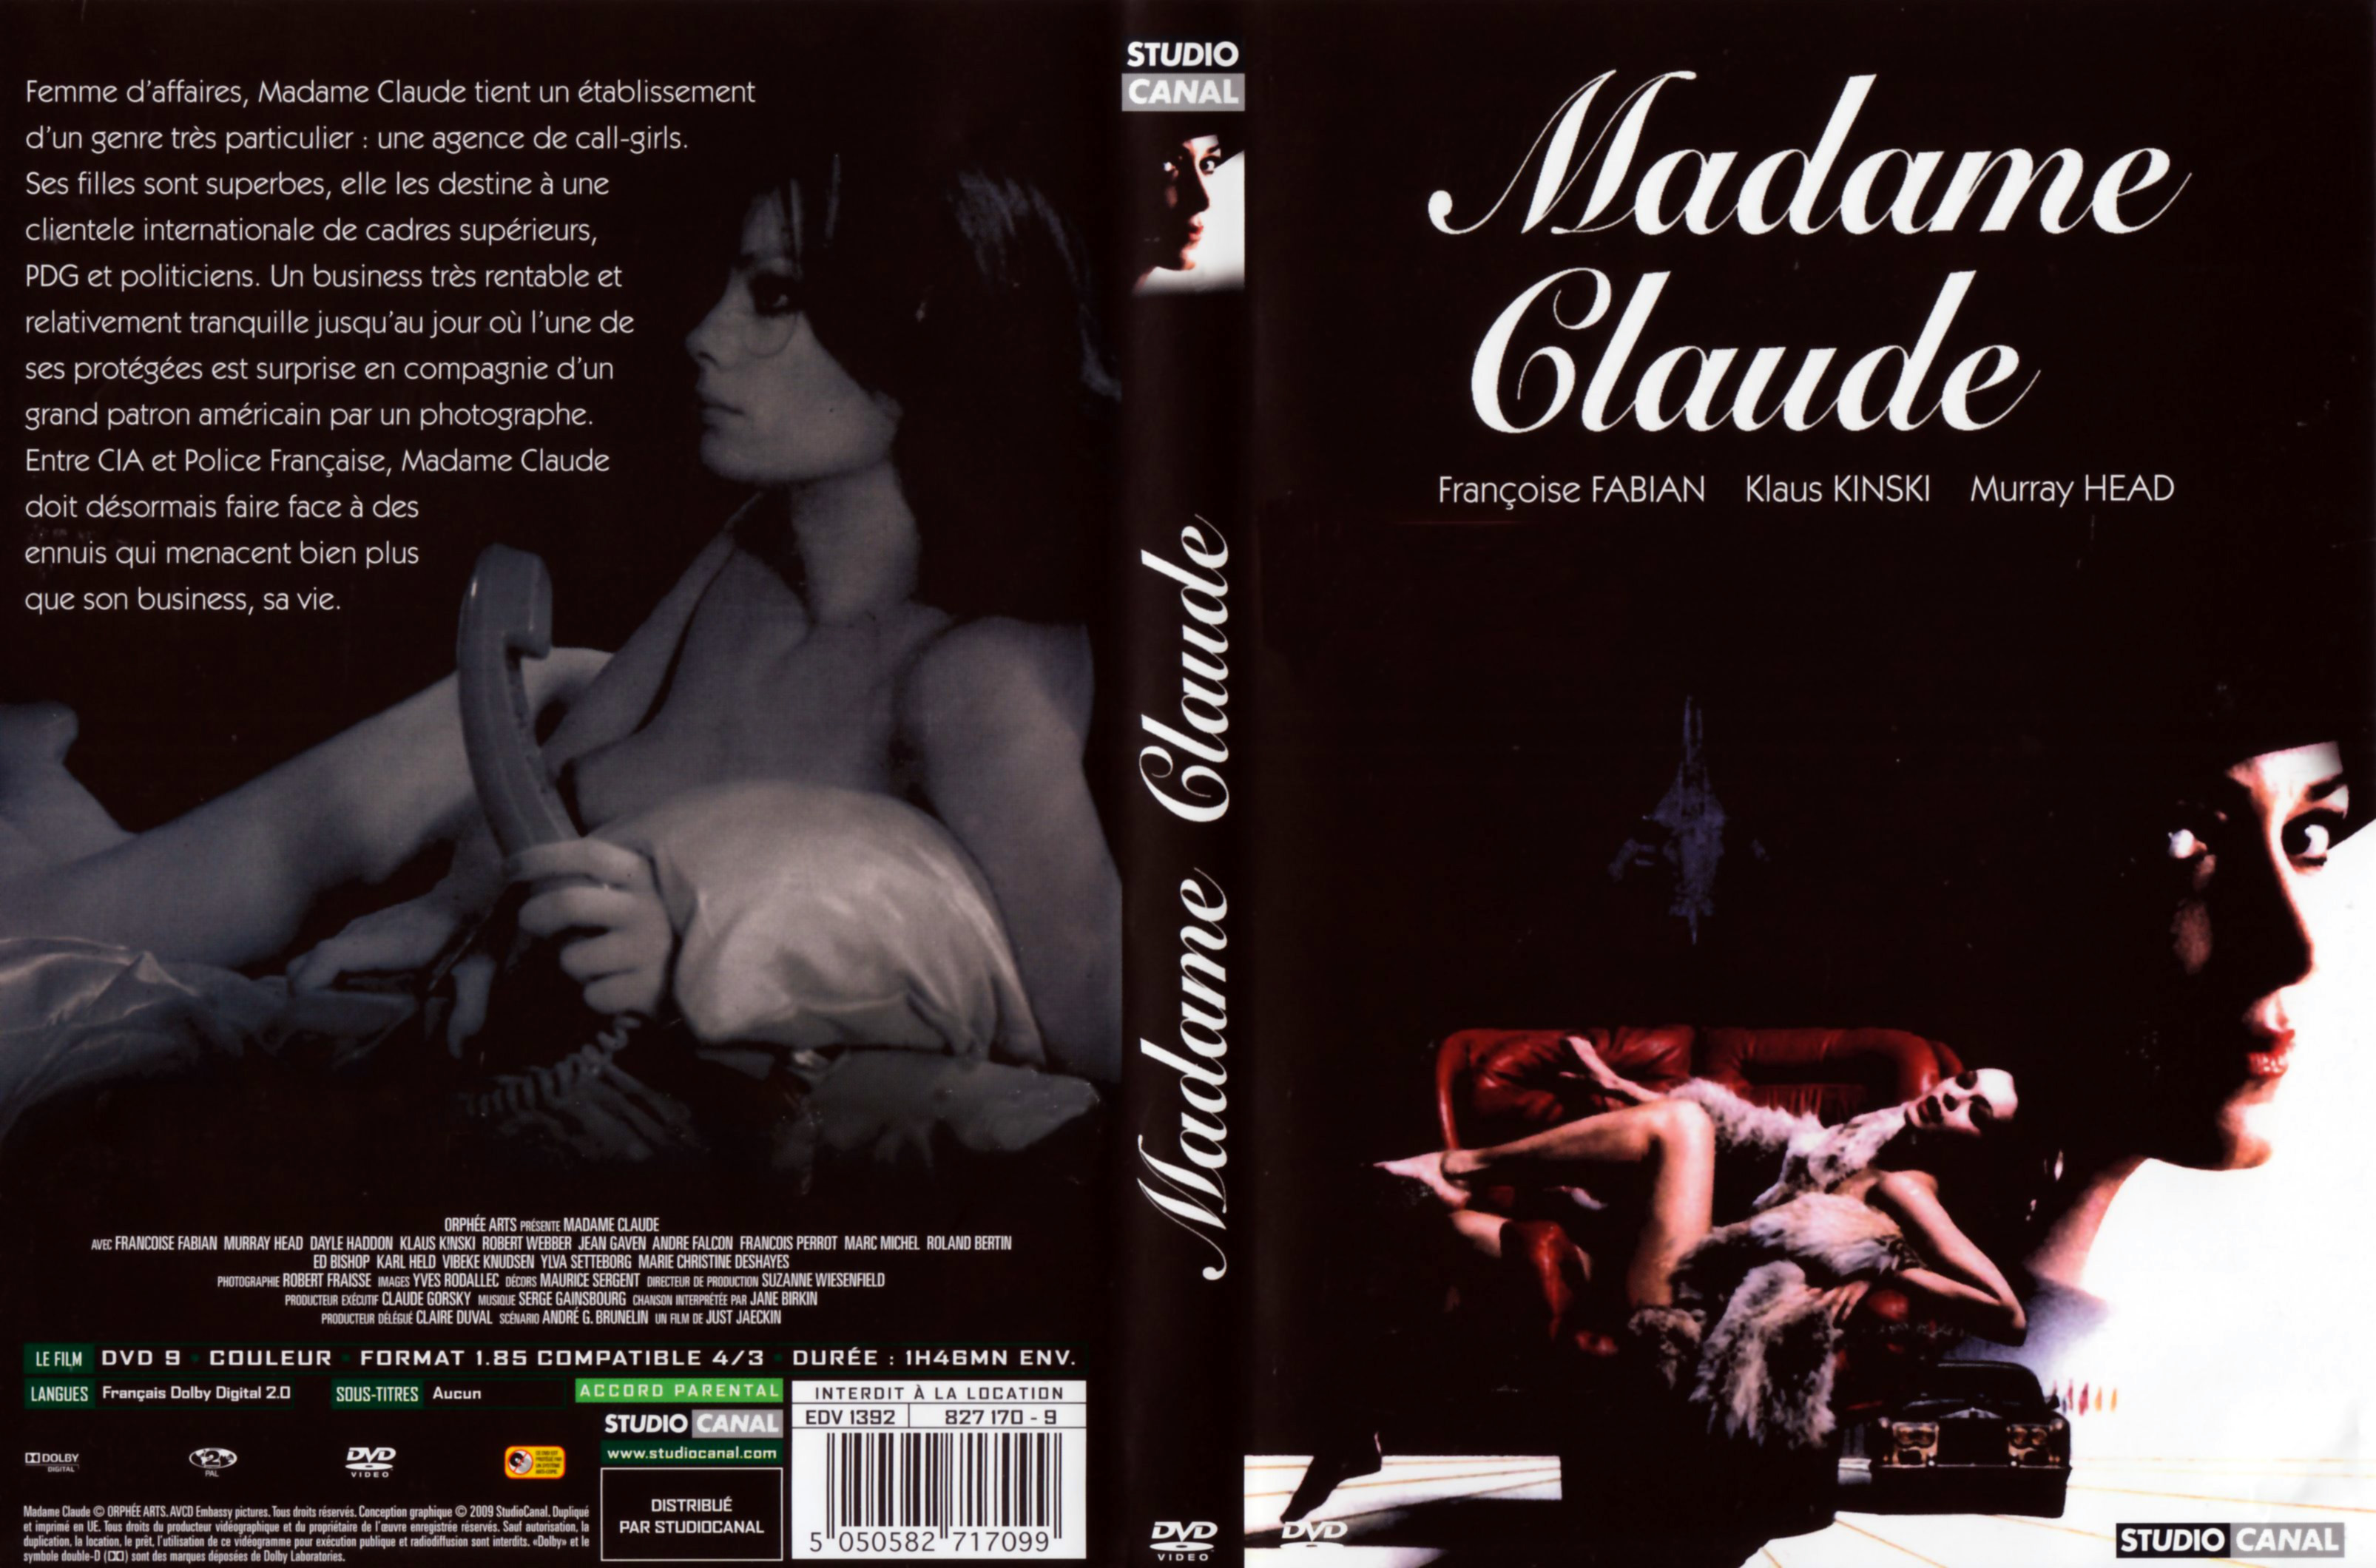 Jaquette DVD Madame Claude